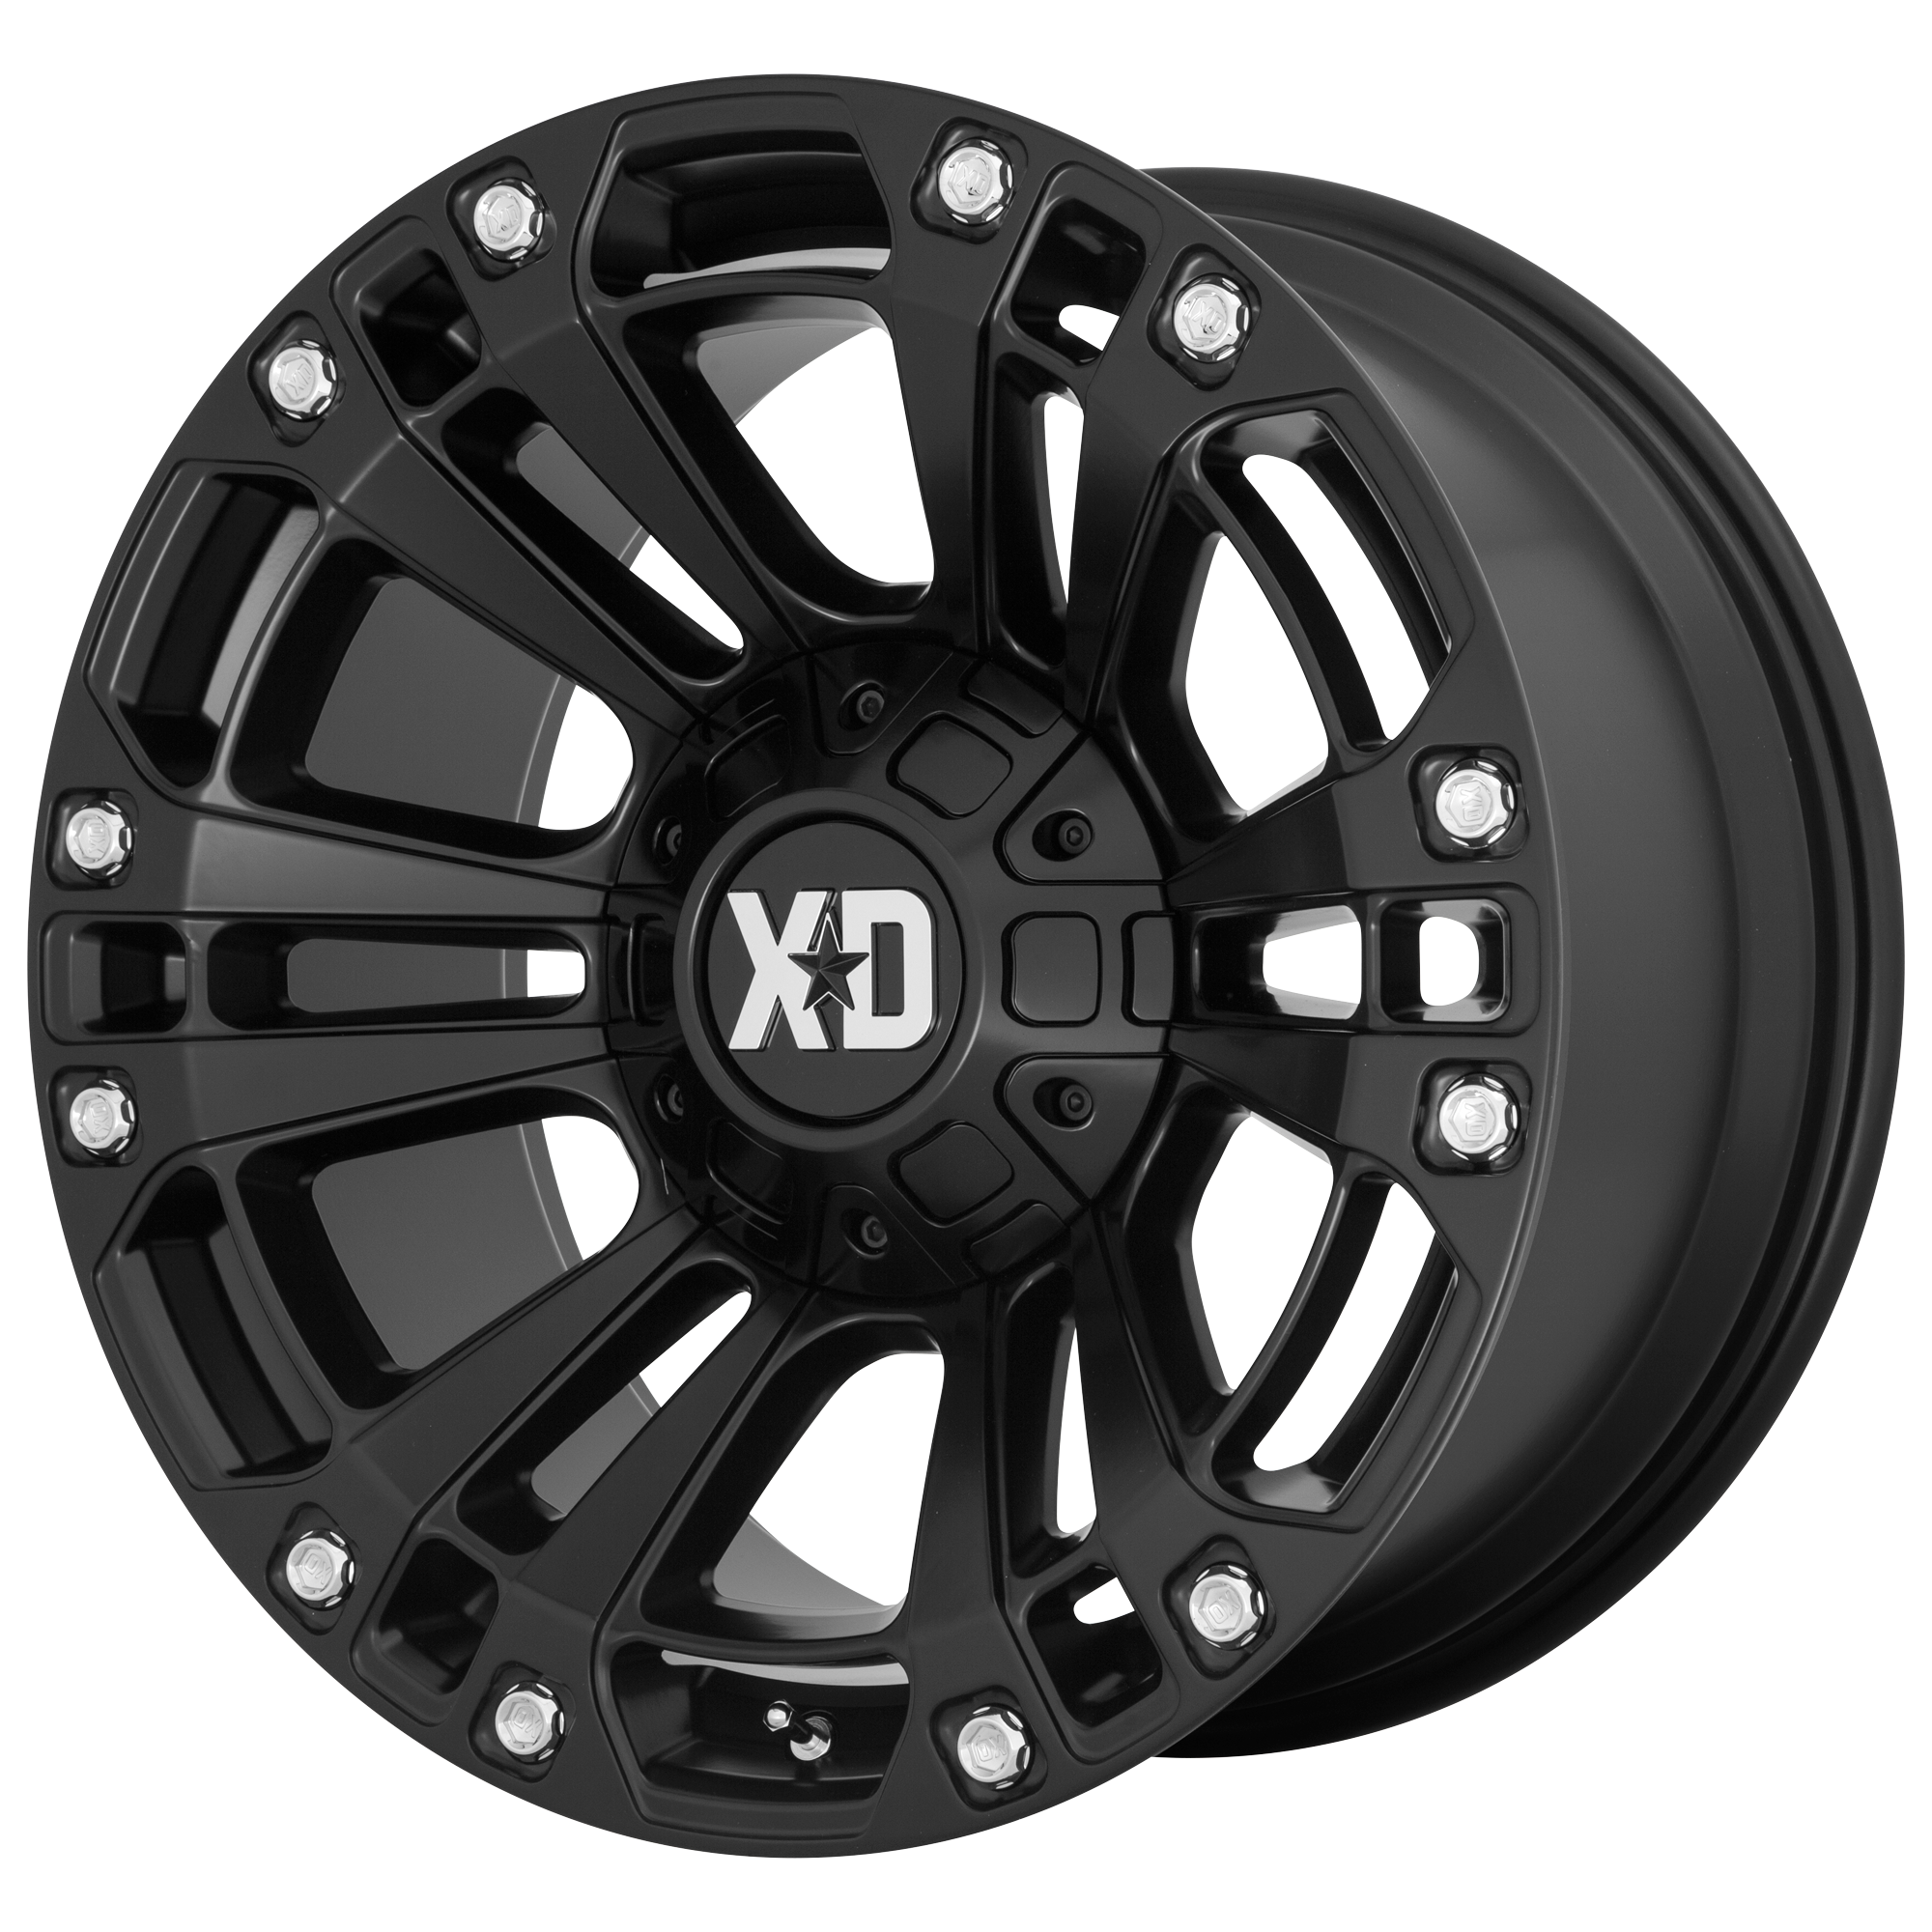 XD 20"x9" Non-Chrome Satin Black Custom Wheel ARSWCWXD85129080700